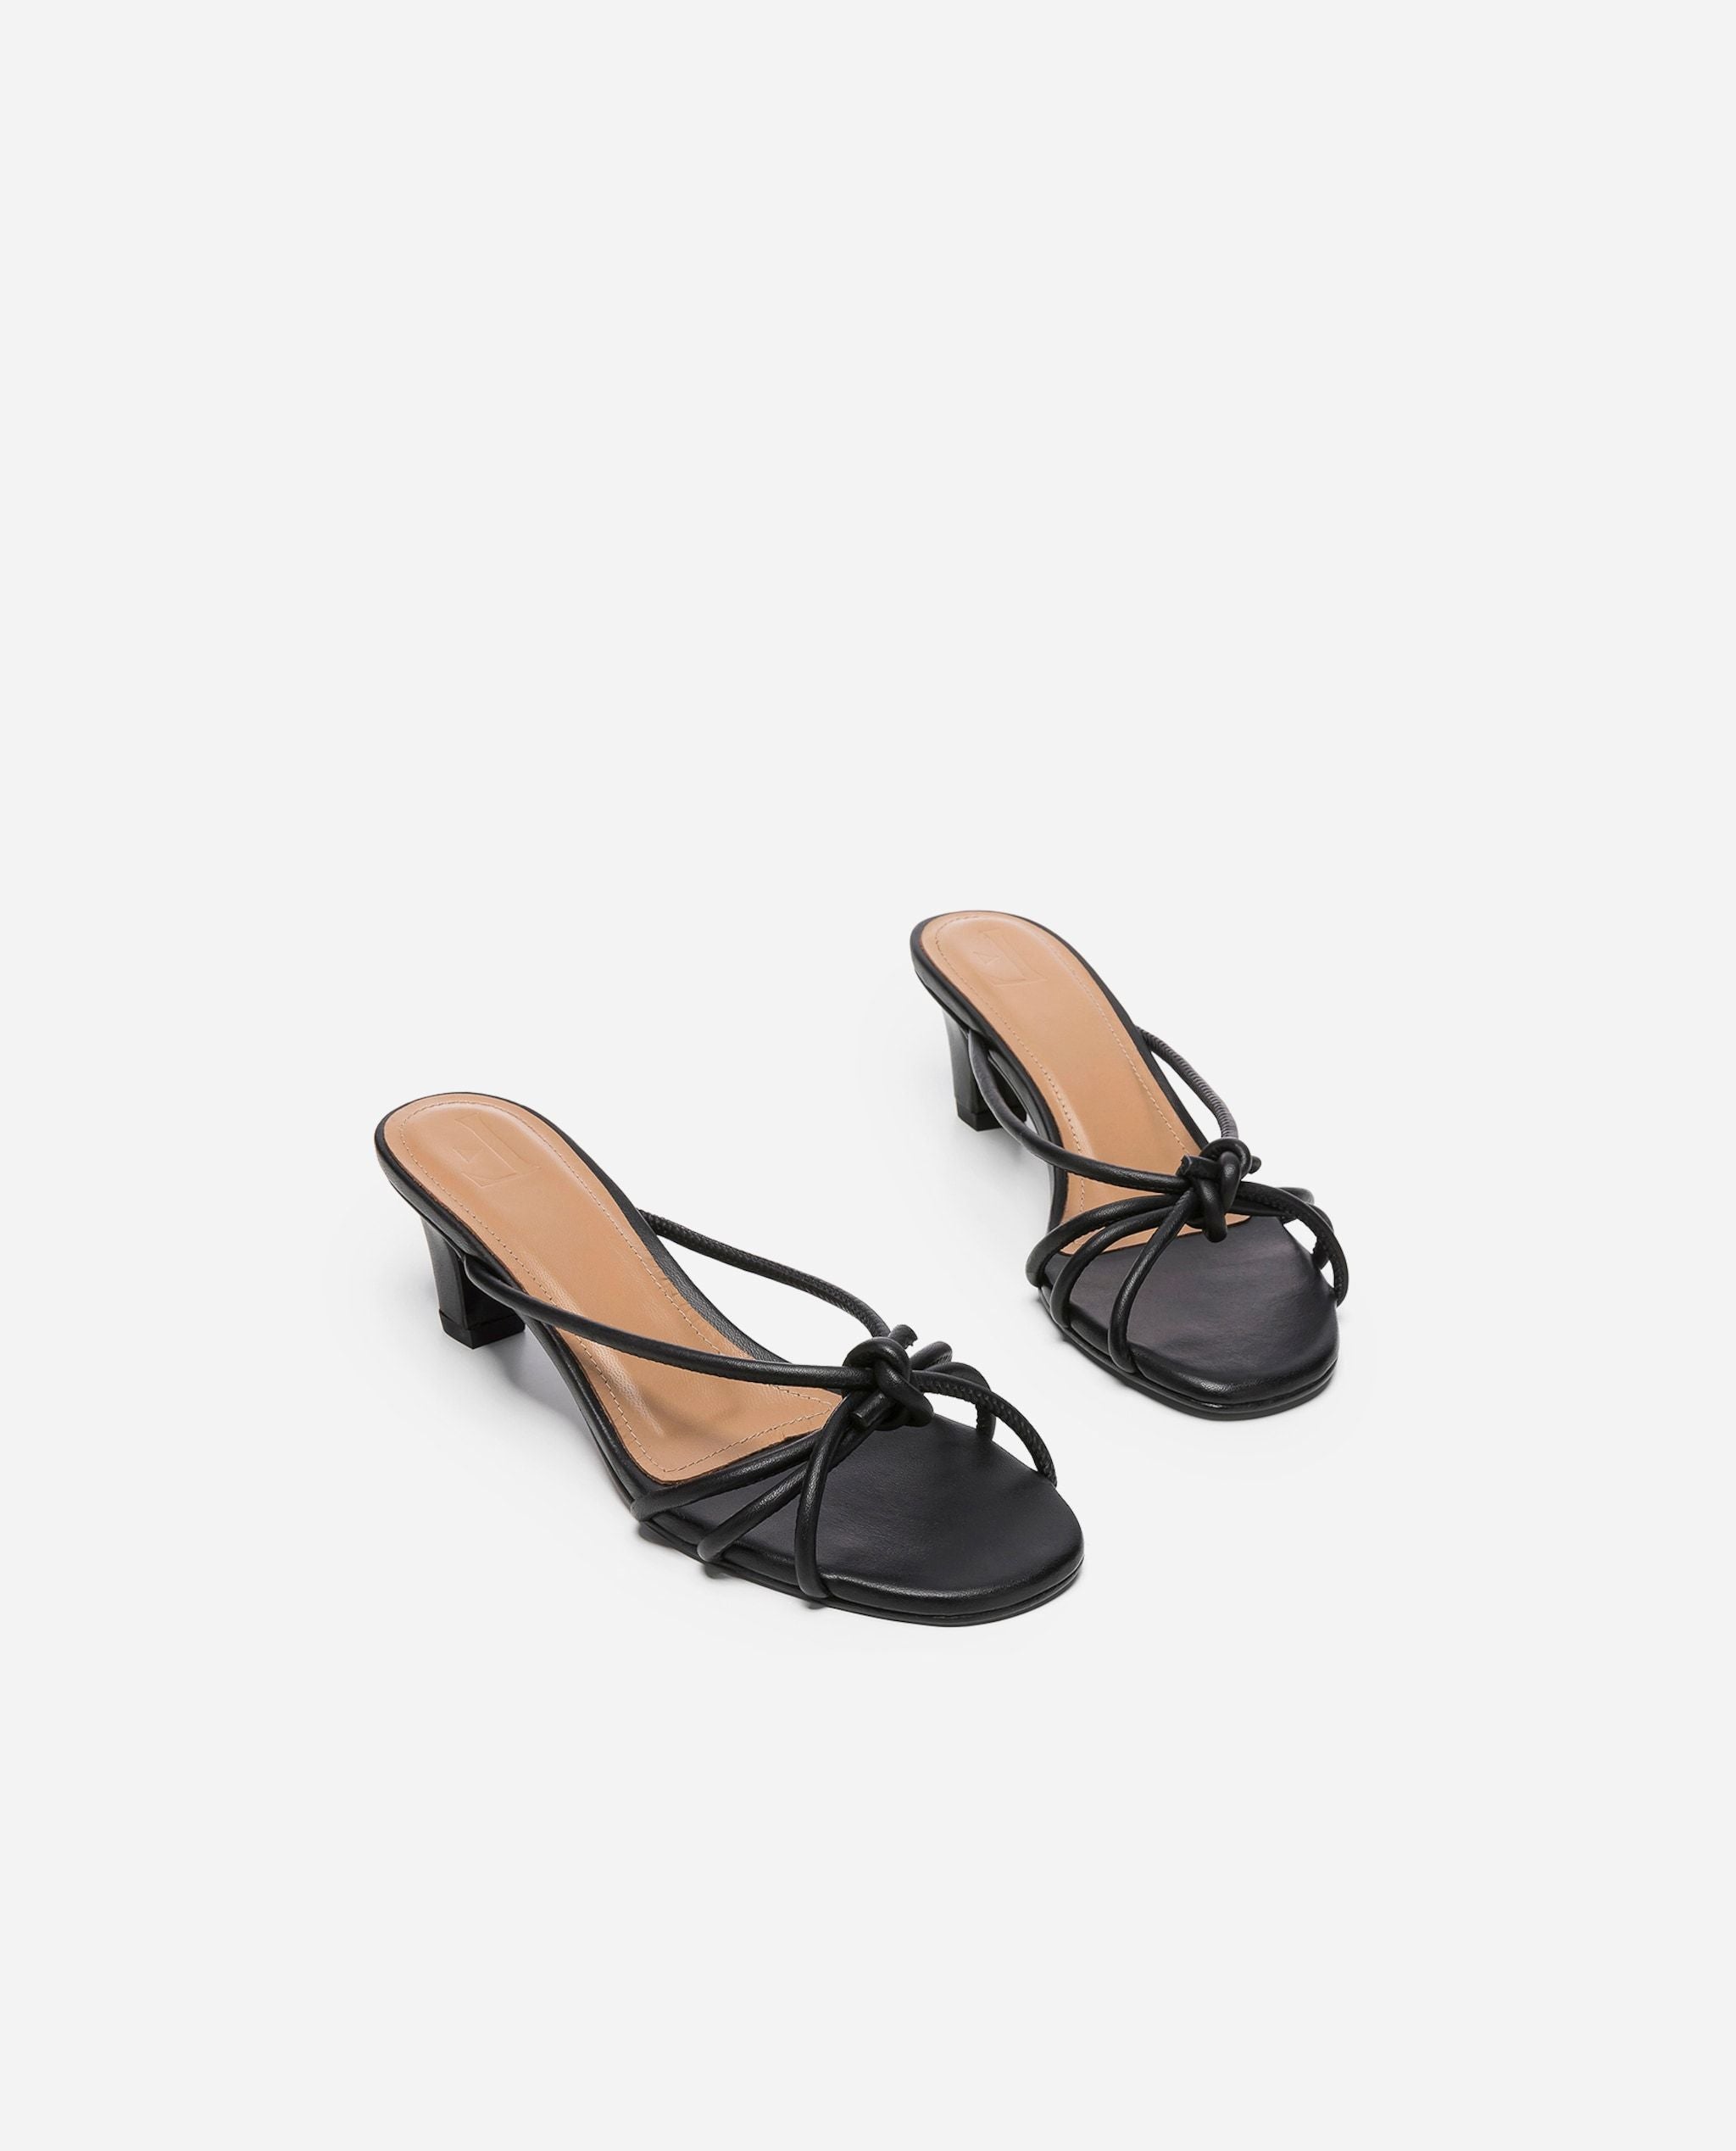 Eunice Leather Black Heeled Sandals 20010411301-001 - 2